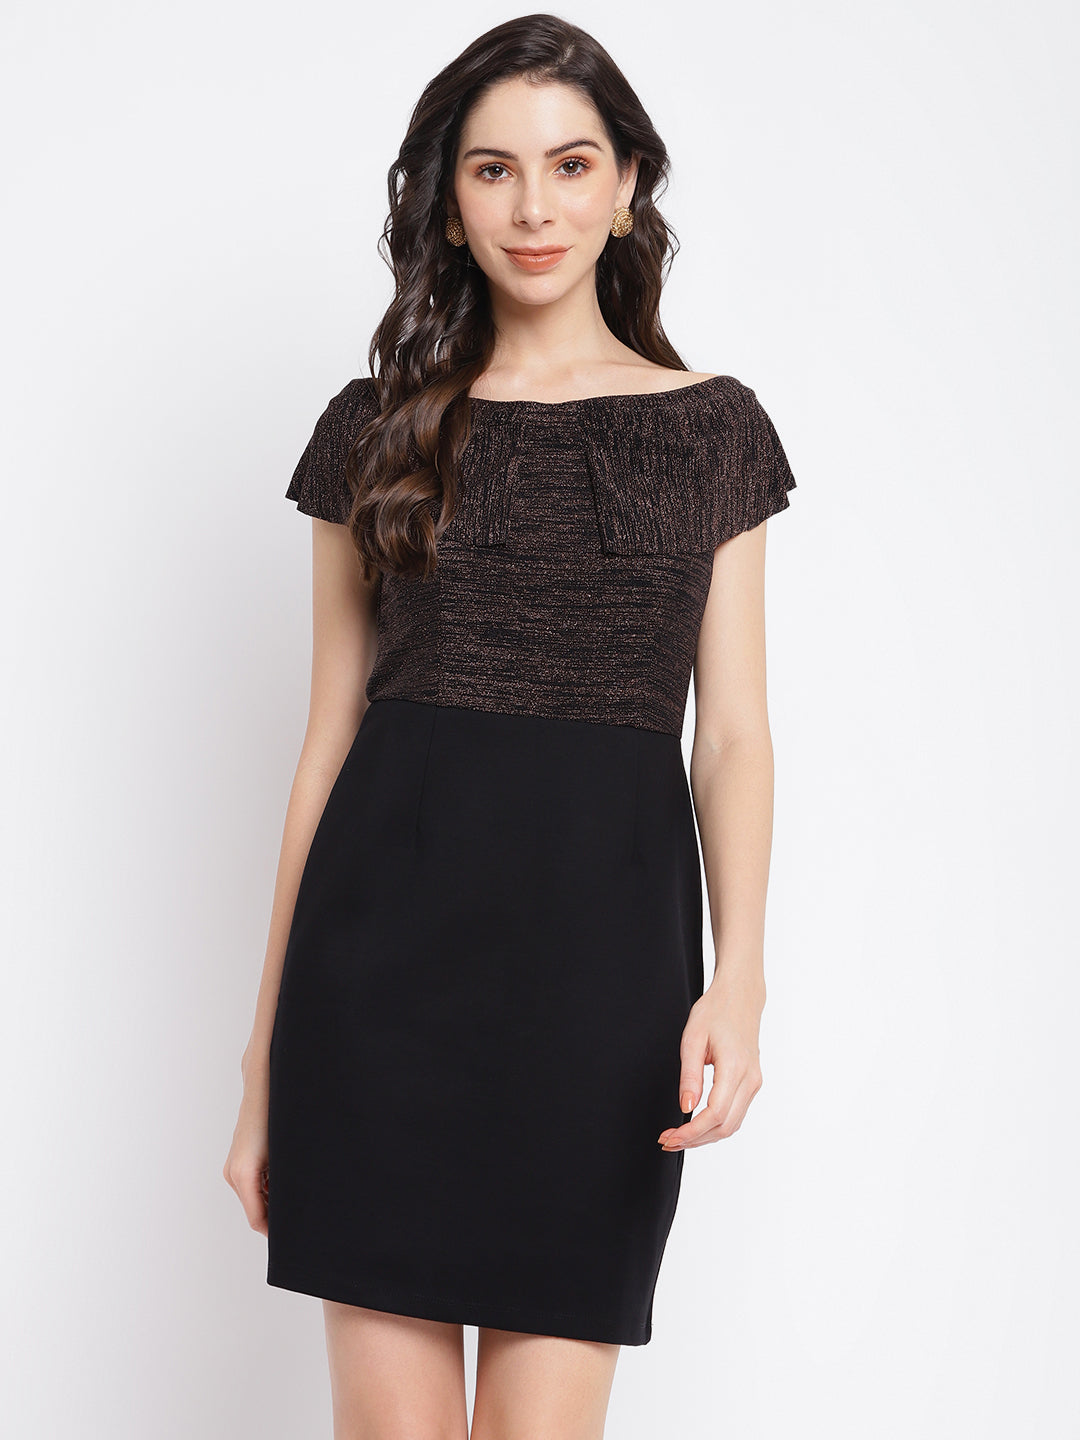 Black Half Sleeve 2 Fir 1 Dress With Solid